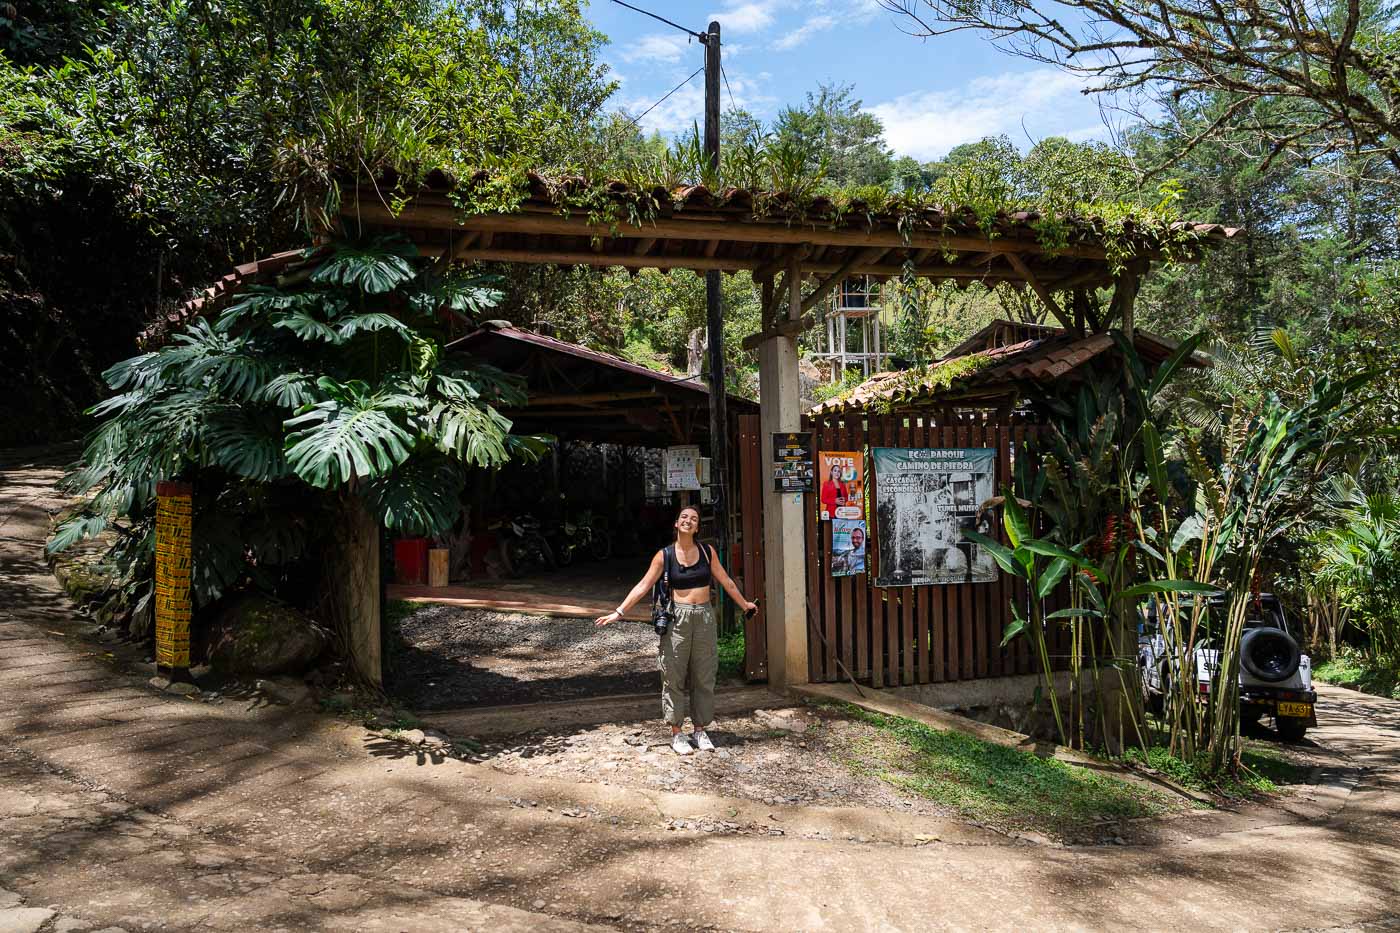 Sara posing on the road outside the wooden entrance gate to Cueva de los Murcielagos.